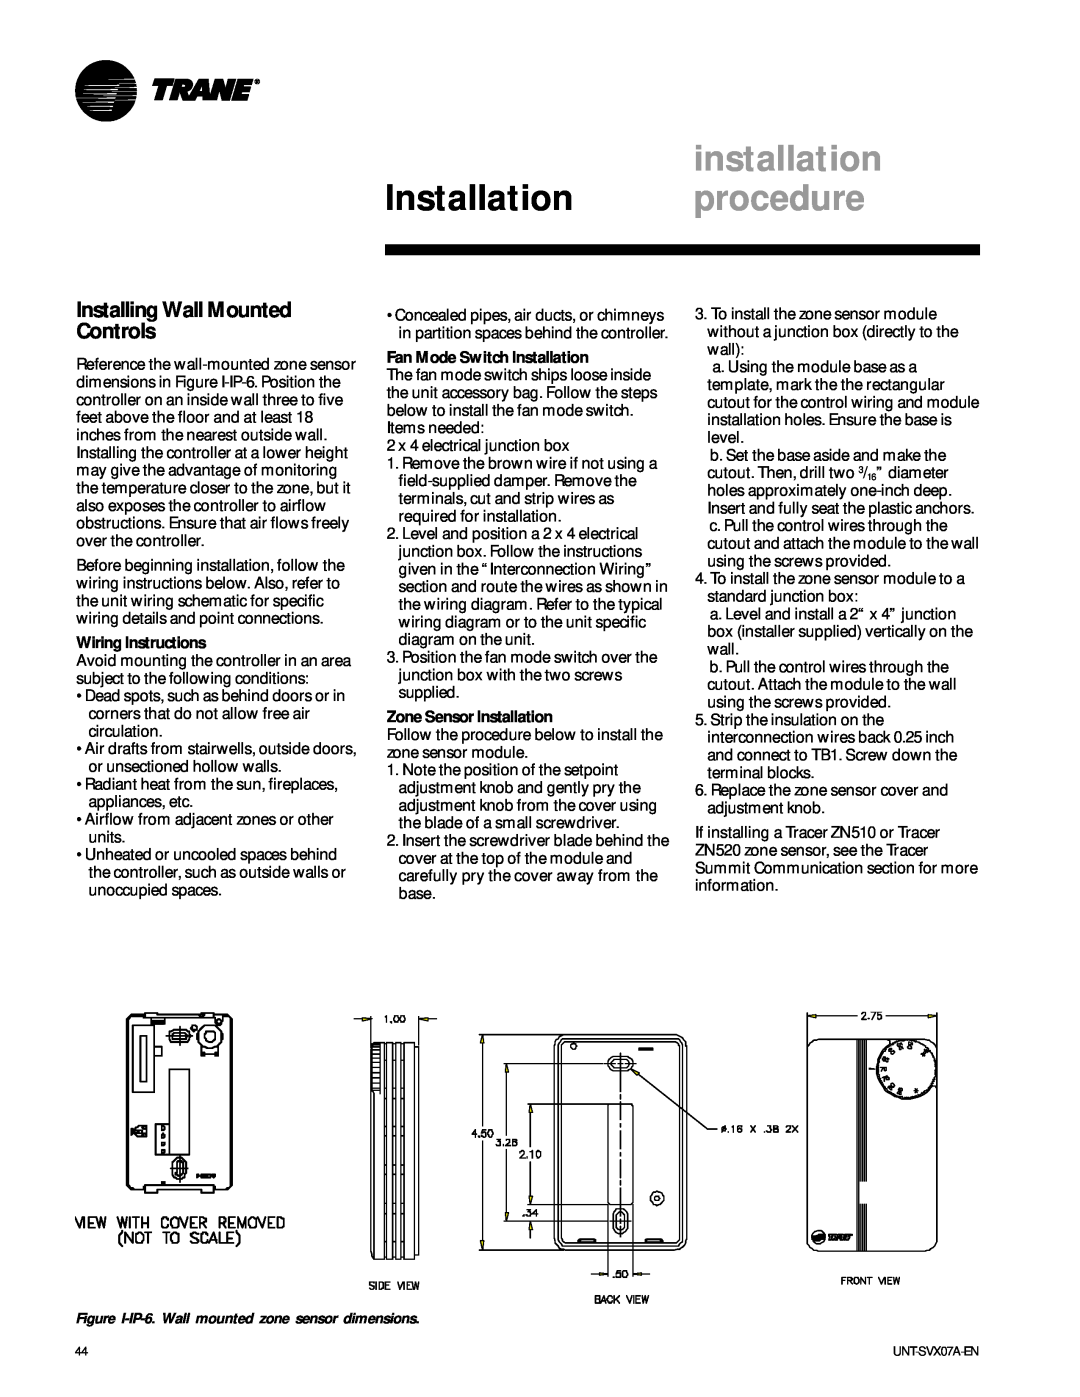 Trane UNT-SVX07A-EN manual Installing Wall Mounted Controls, installation, Installation procedure, Wiring Instructions 